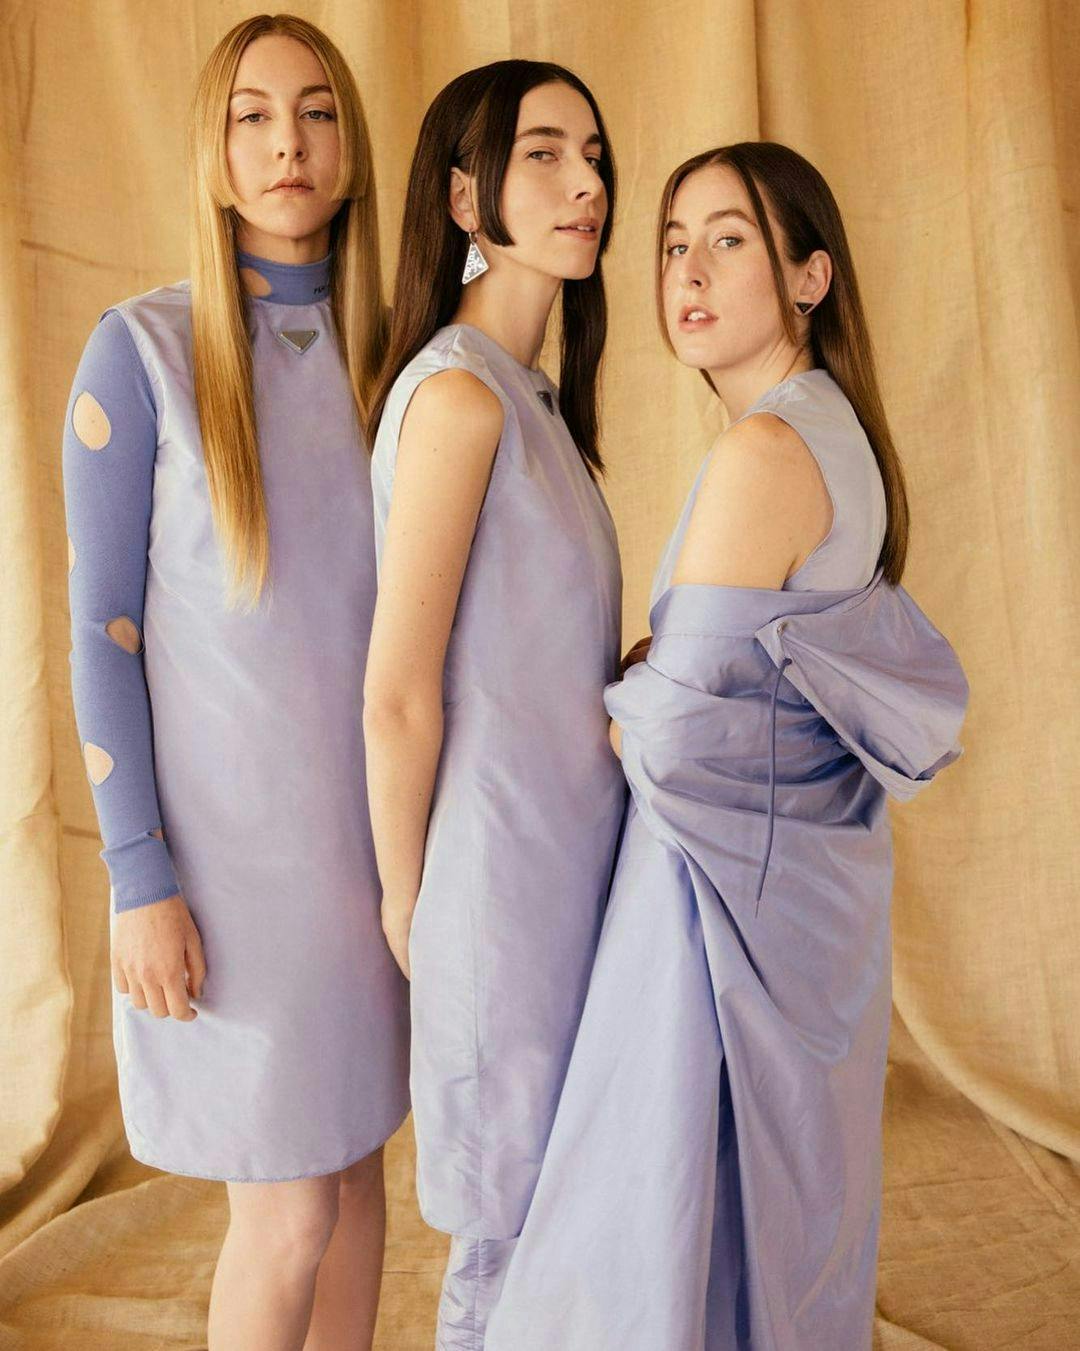 Il gruppo Haim, tre sorelle fashioniste posano ai Grammy Awards 2021 in total look Prada